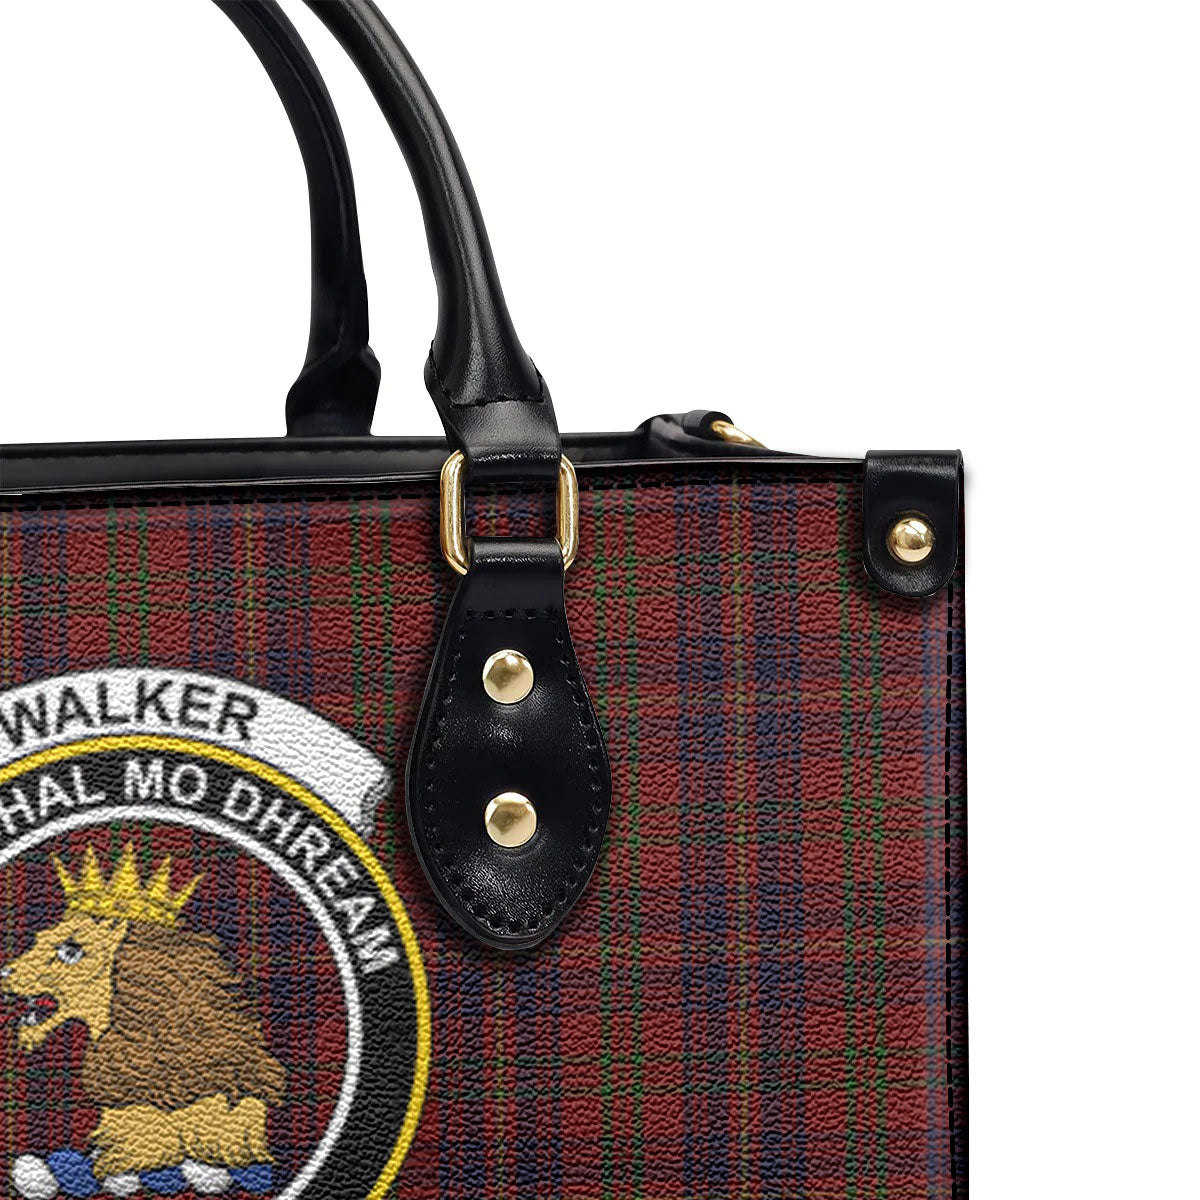 Walker Tartan Crest Leather Handbag